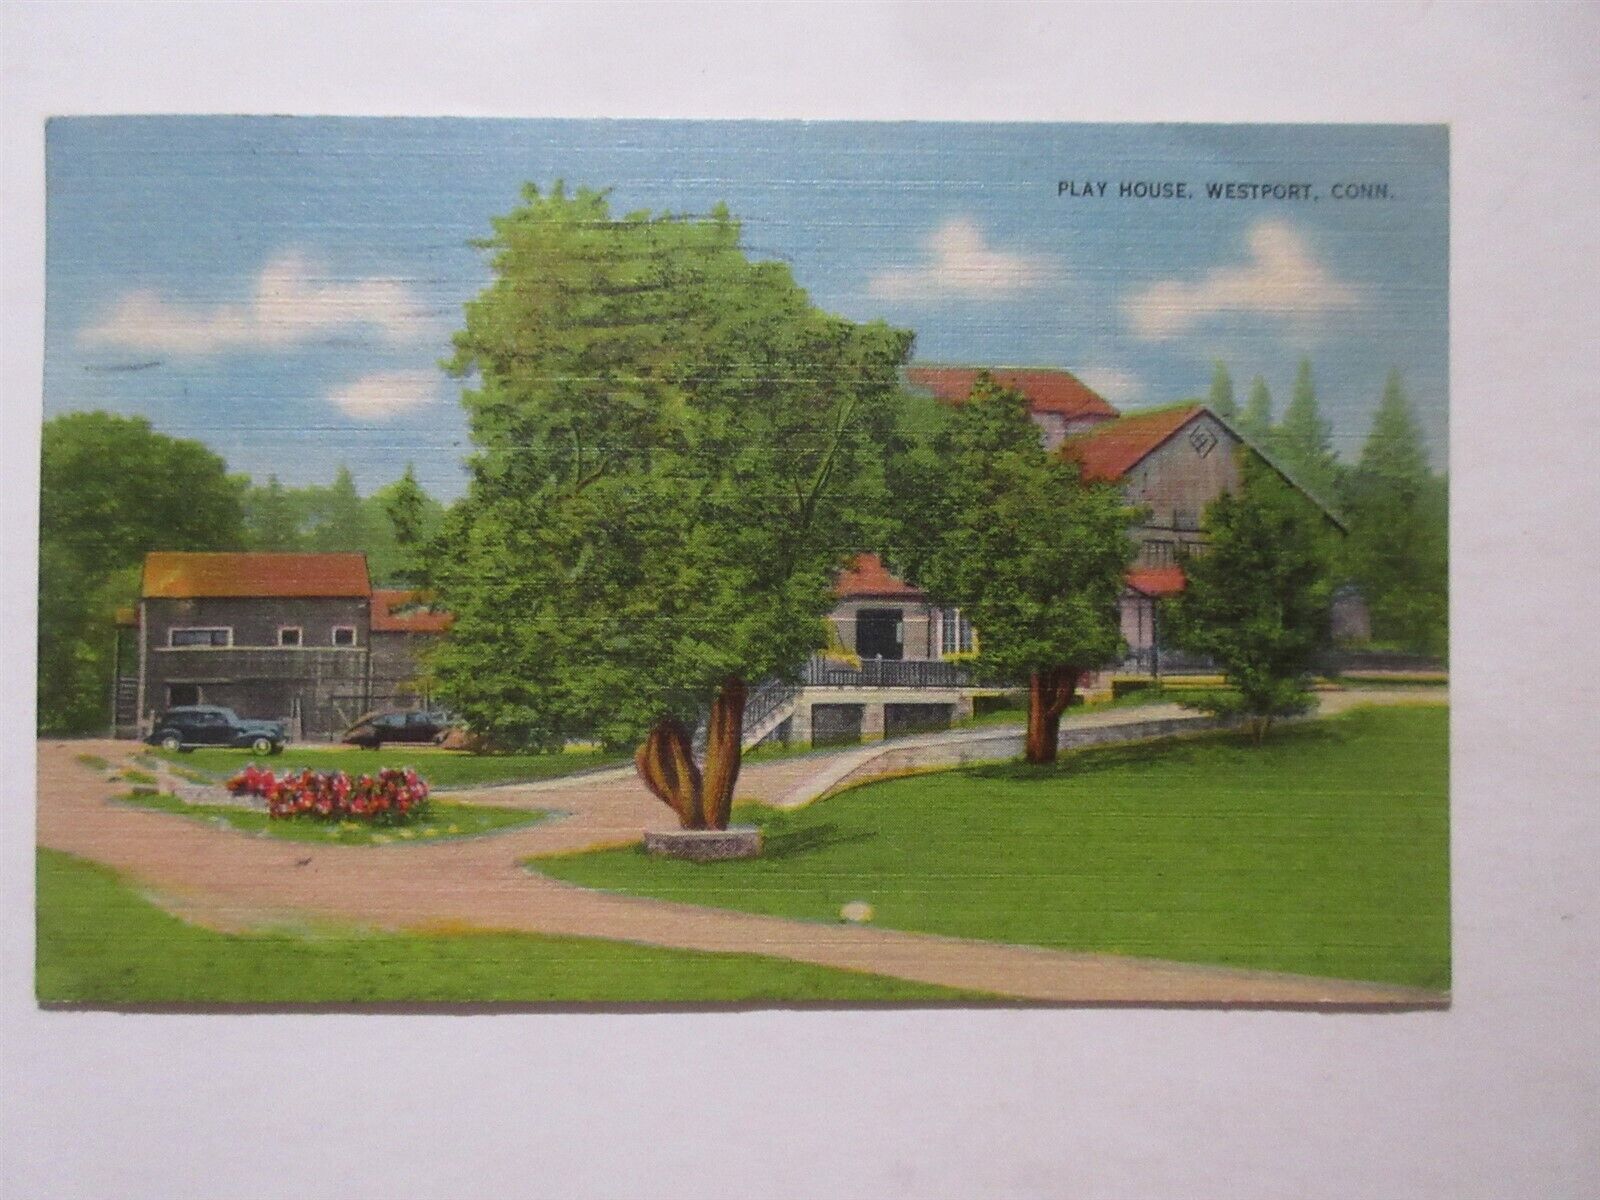 Postcard: CT Westport Country Playhouse, Westport, Connecticut - 1942 Linen